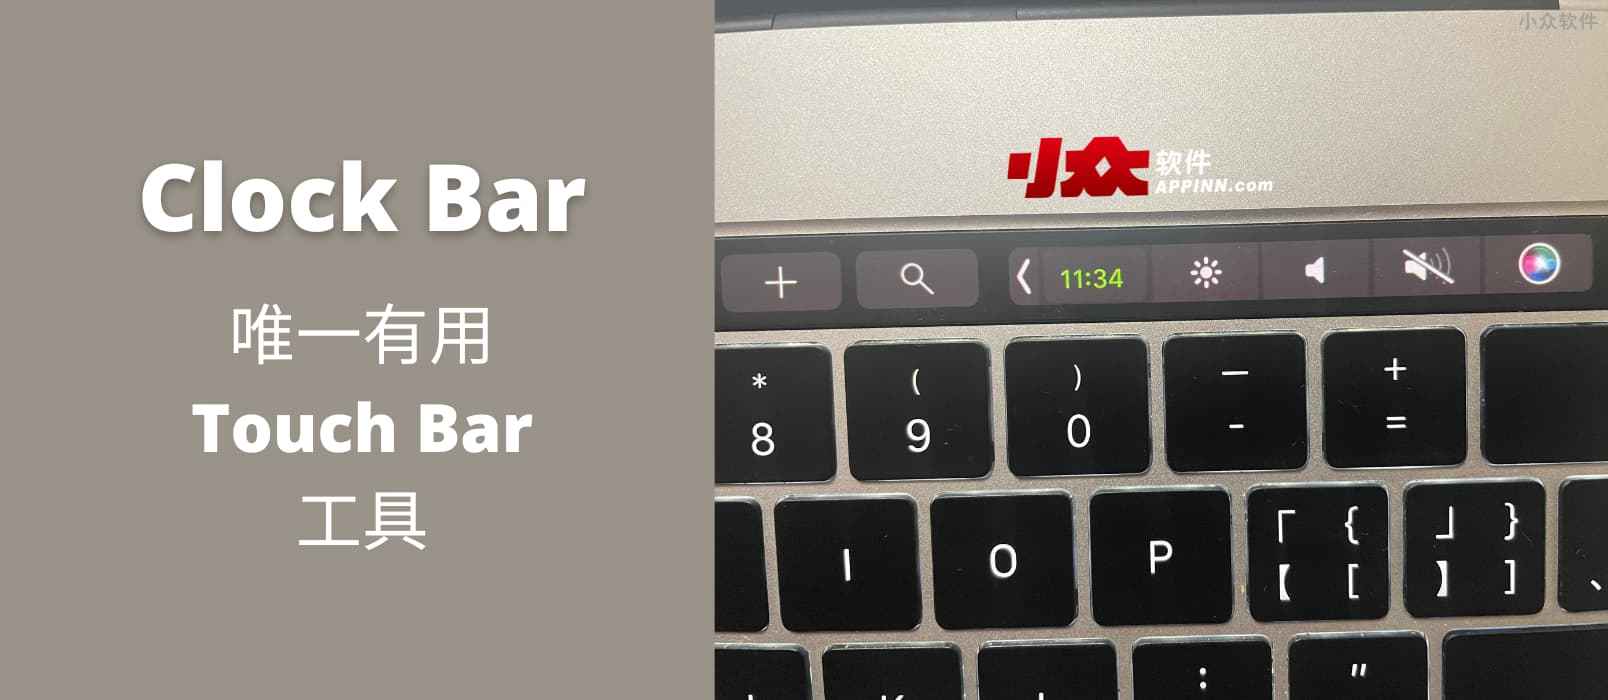 Clock Bar – 在 Touch Bar 显示当前时间，唯一有用 Touch Bar 工具